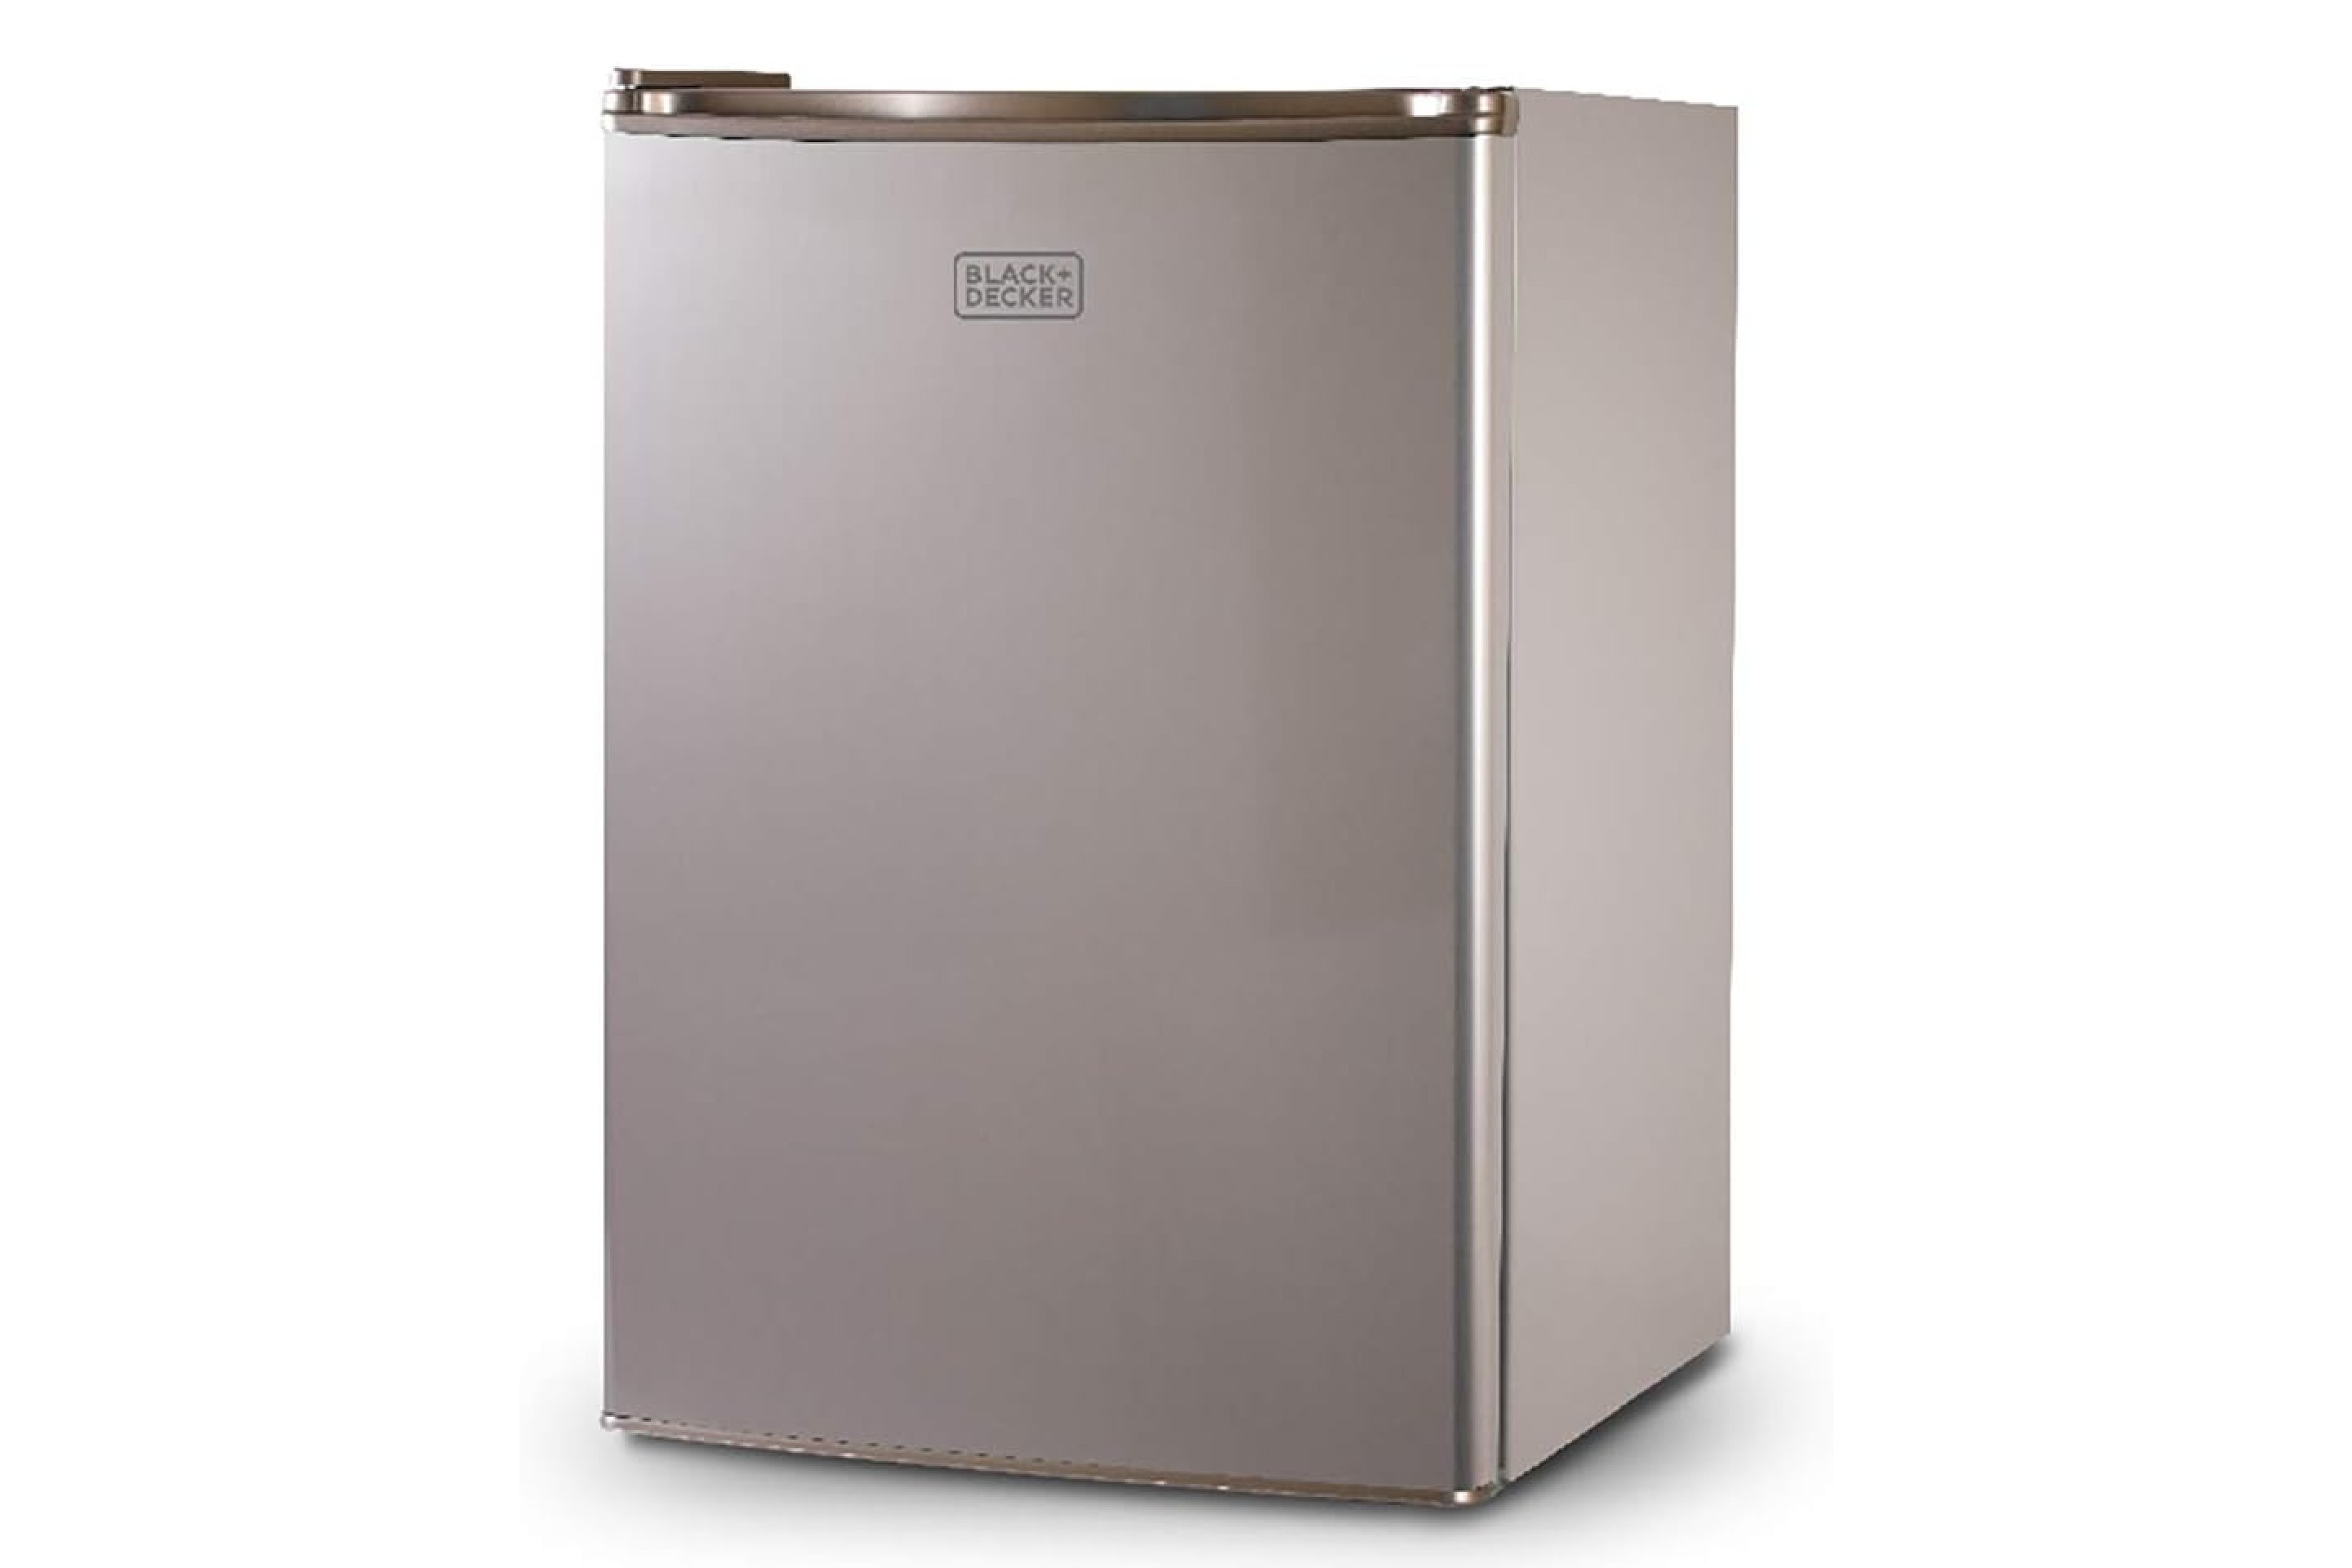 The 10 Best Dorm Room Refrigerators of 2023 - PureWow